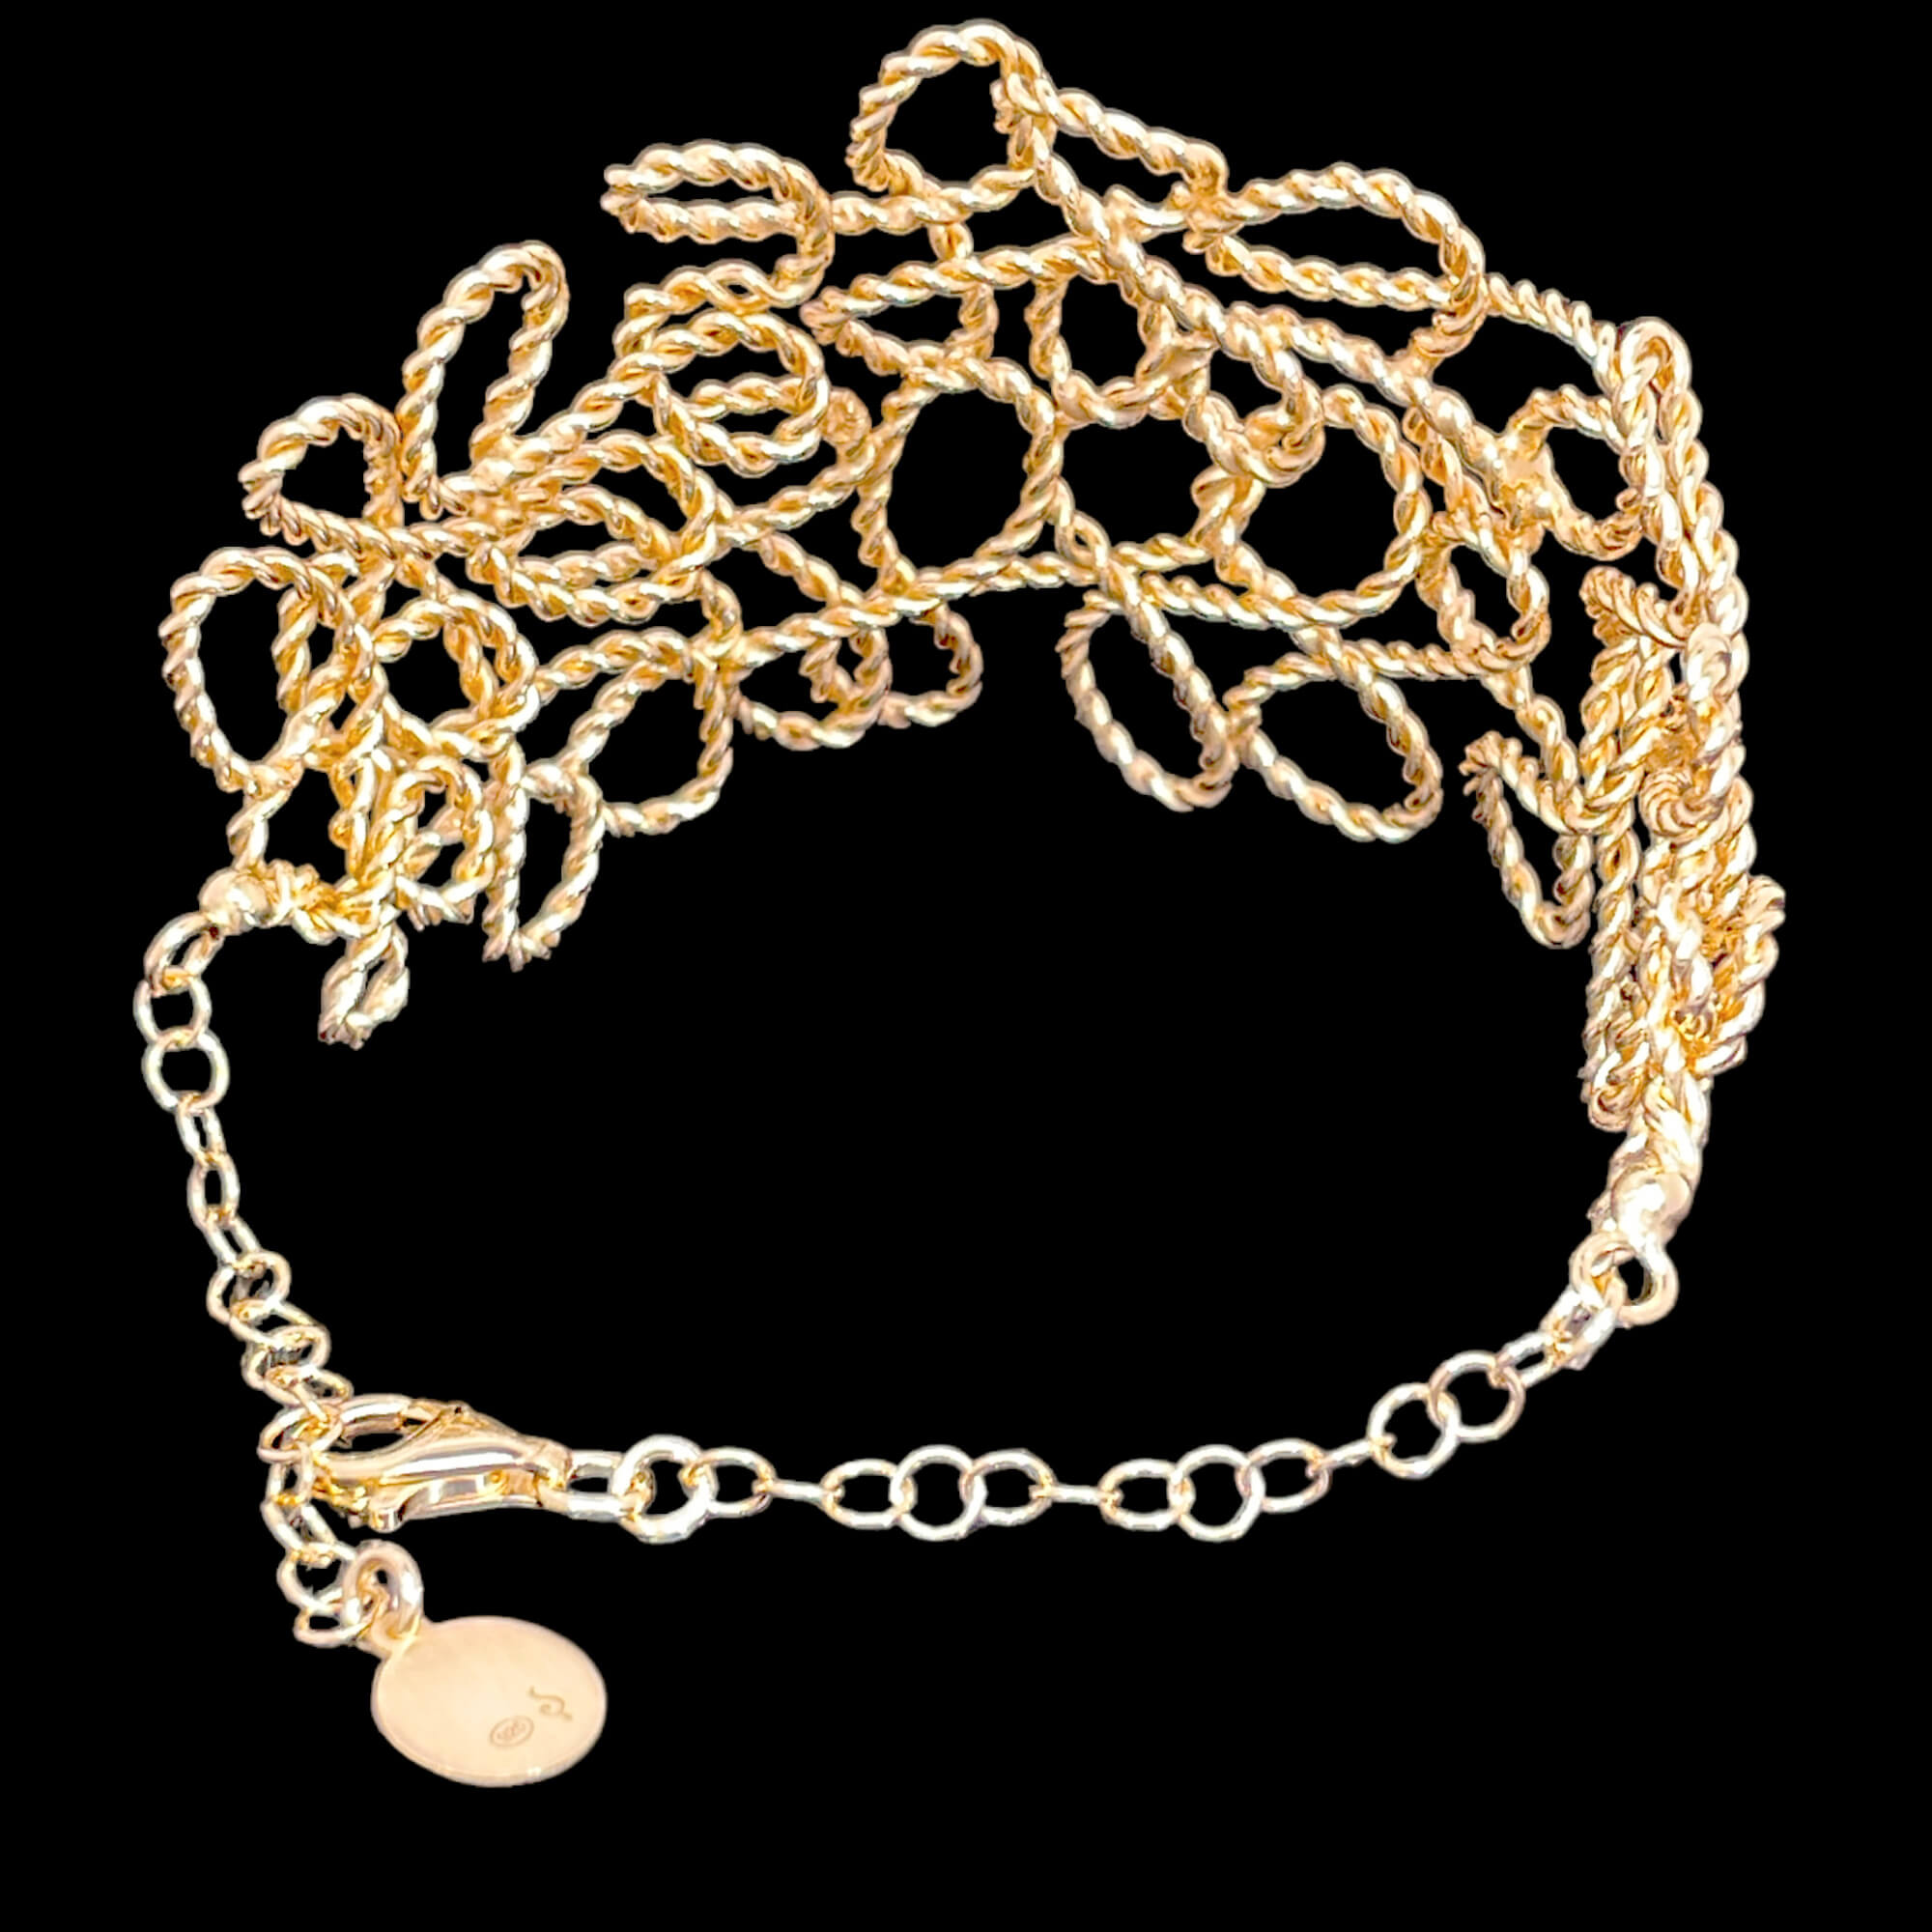 Refined handmade, gilded slave bracelet with lock